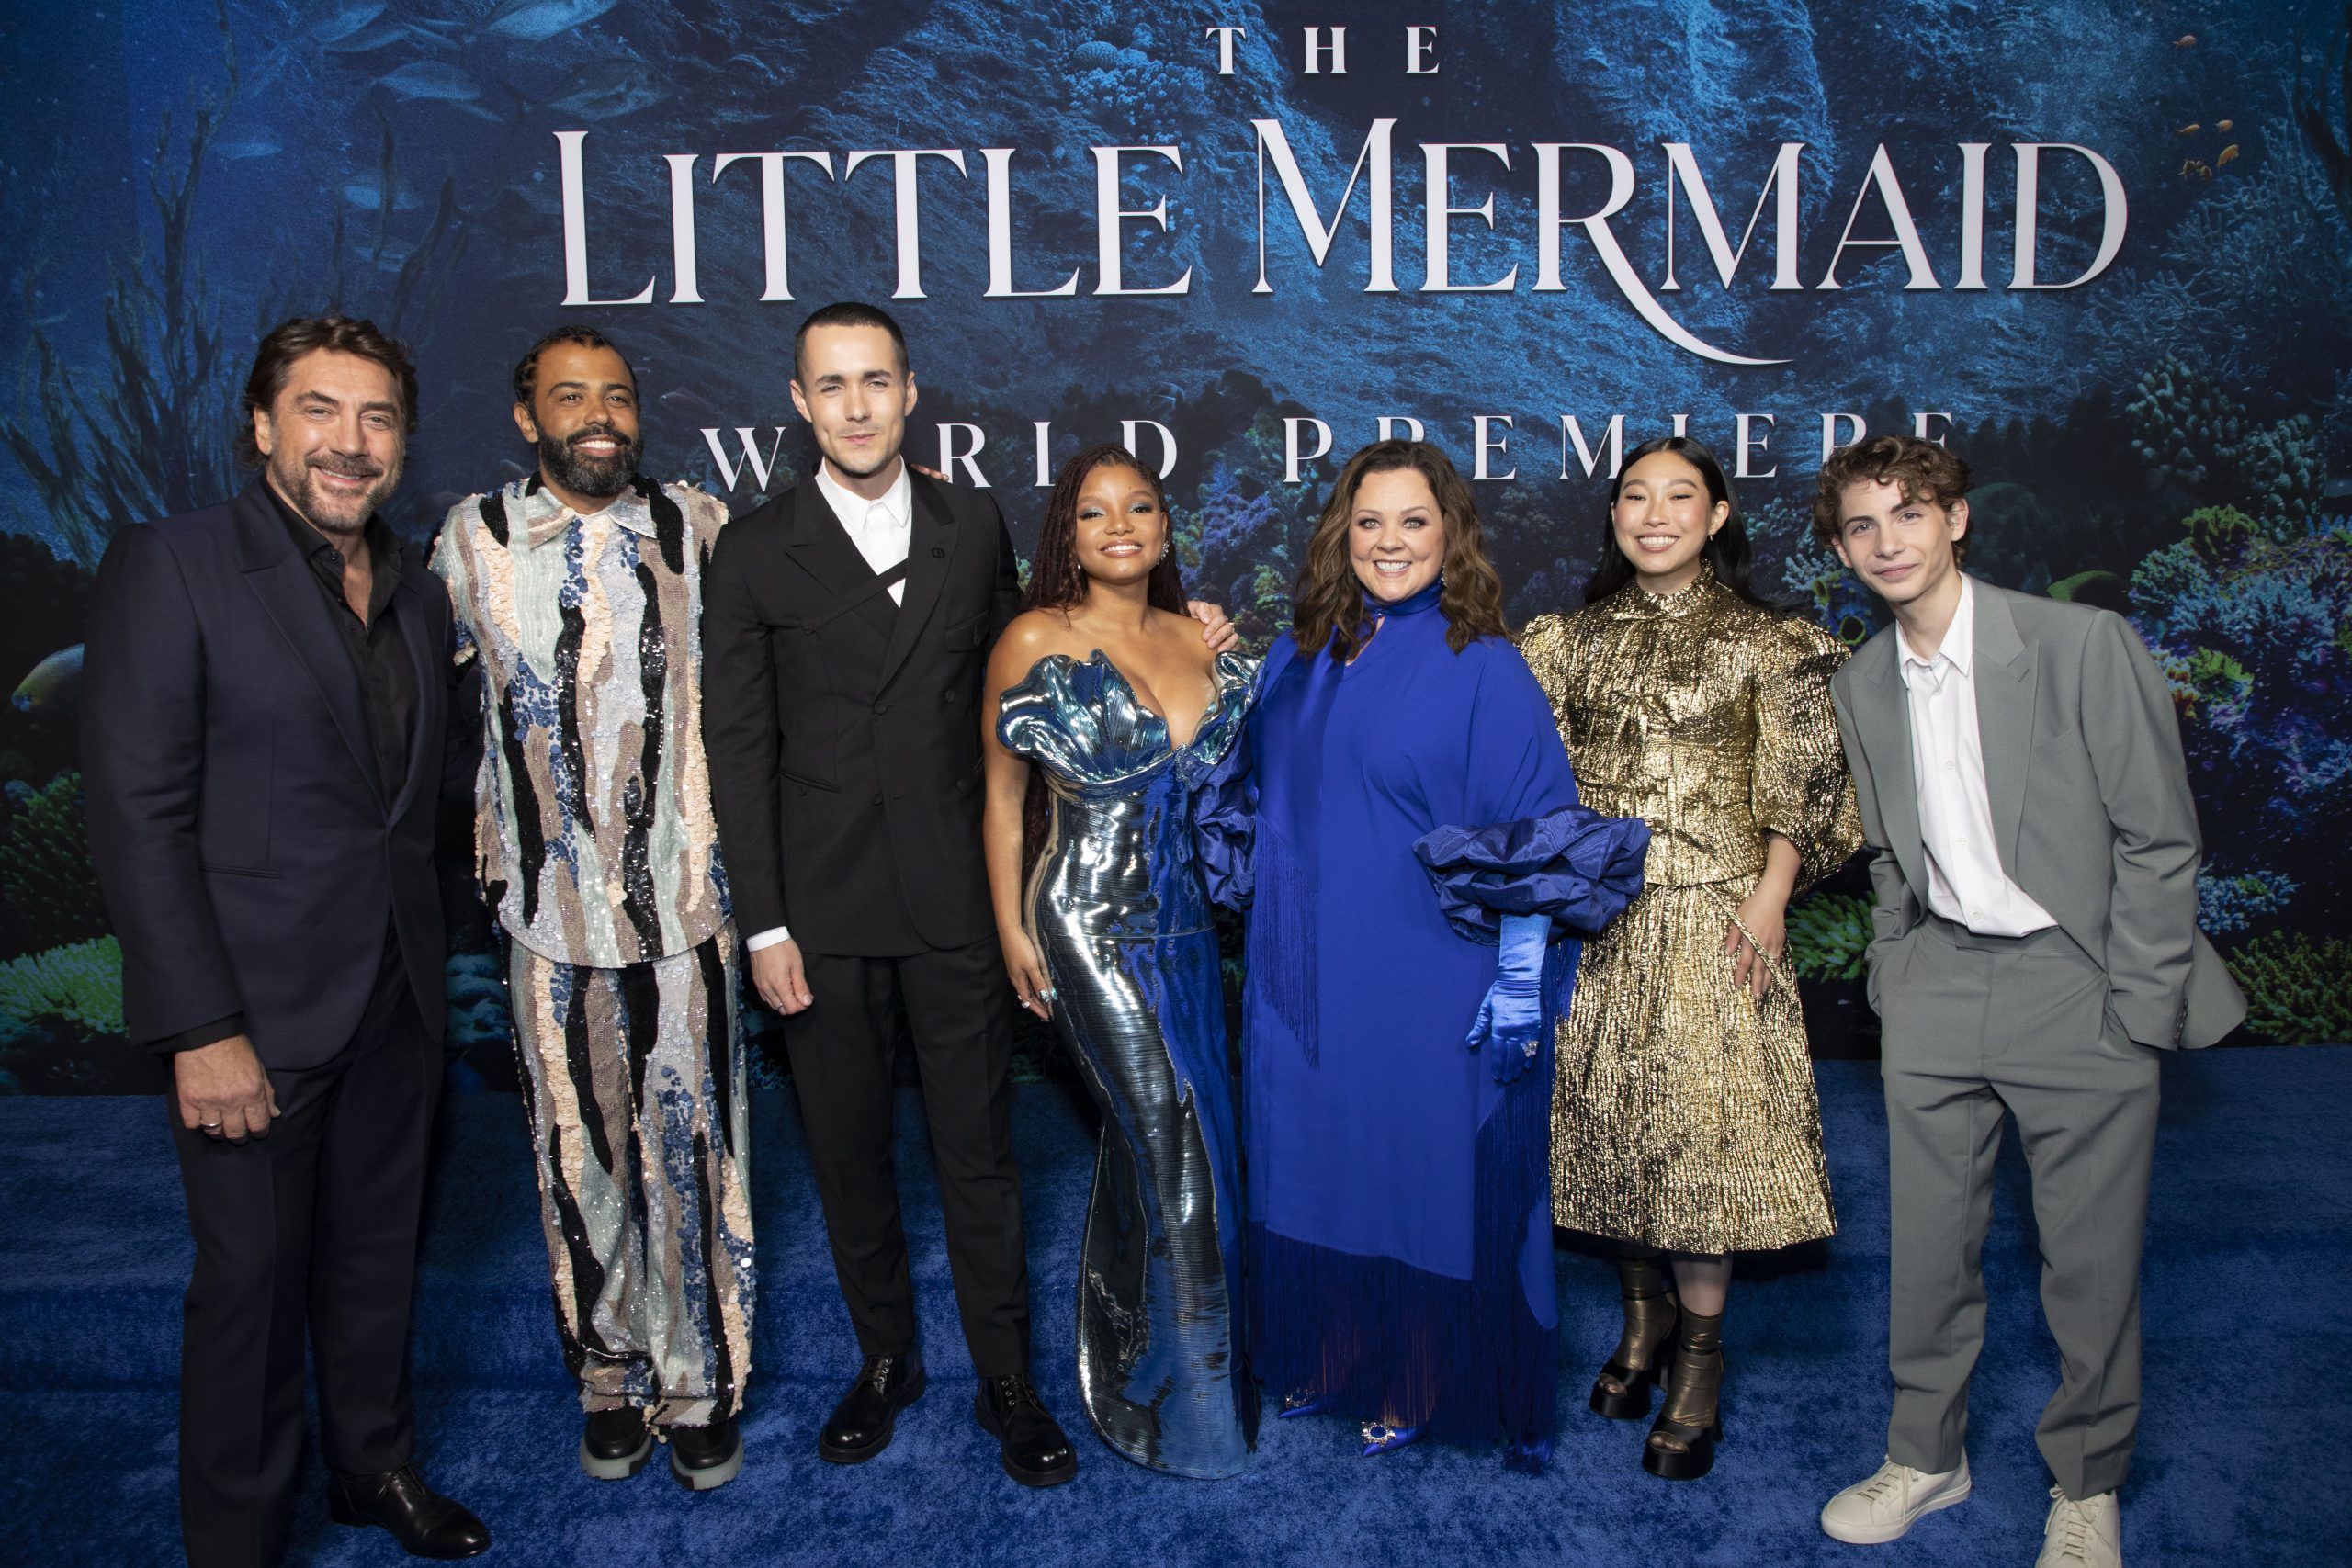 Red Carpet Rundown: “THE LITTLE MERMAID” World Premiere In Hollywood